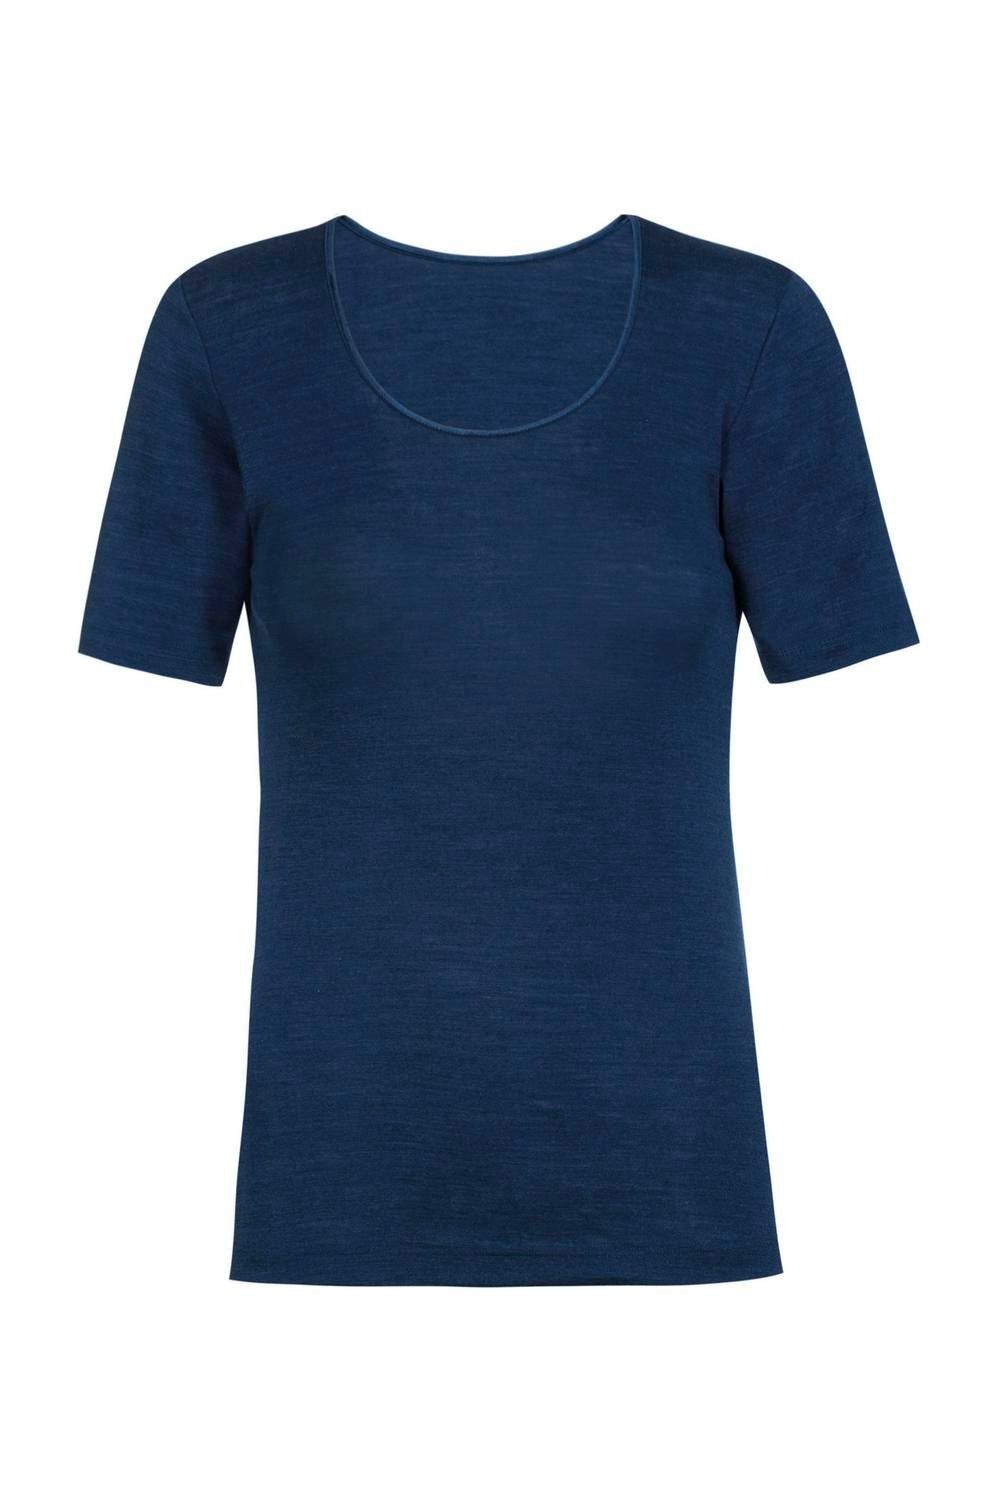 Ärmel 1/2 Spencer Mey T-Shirt blue ink